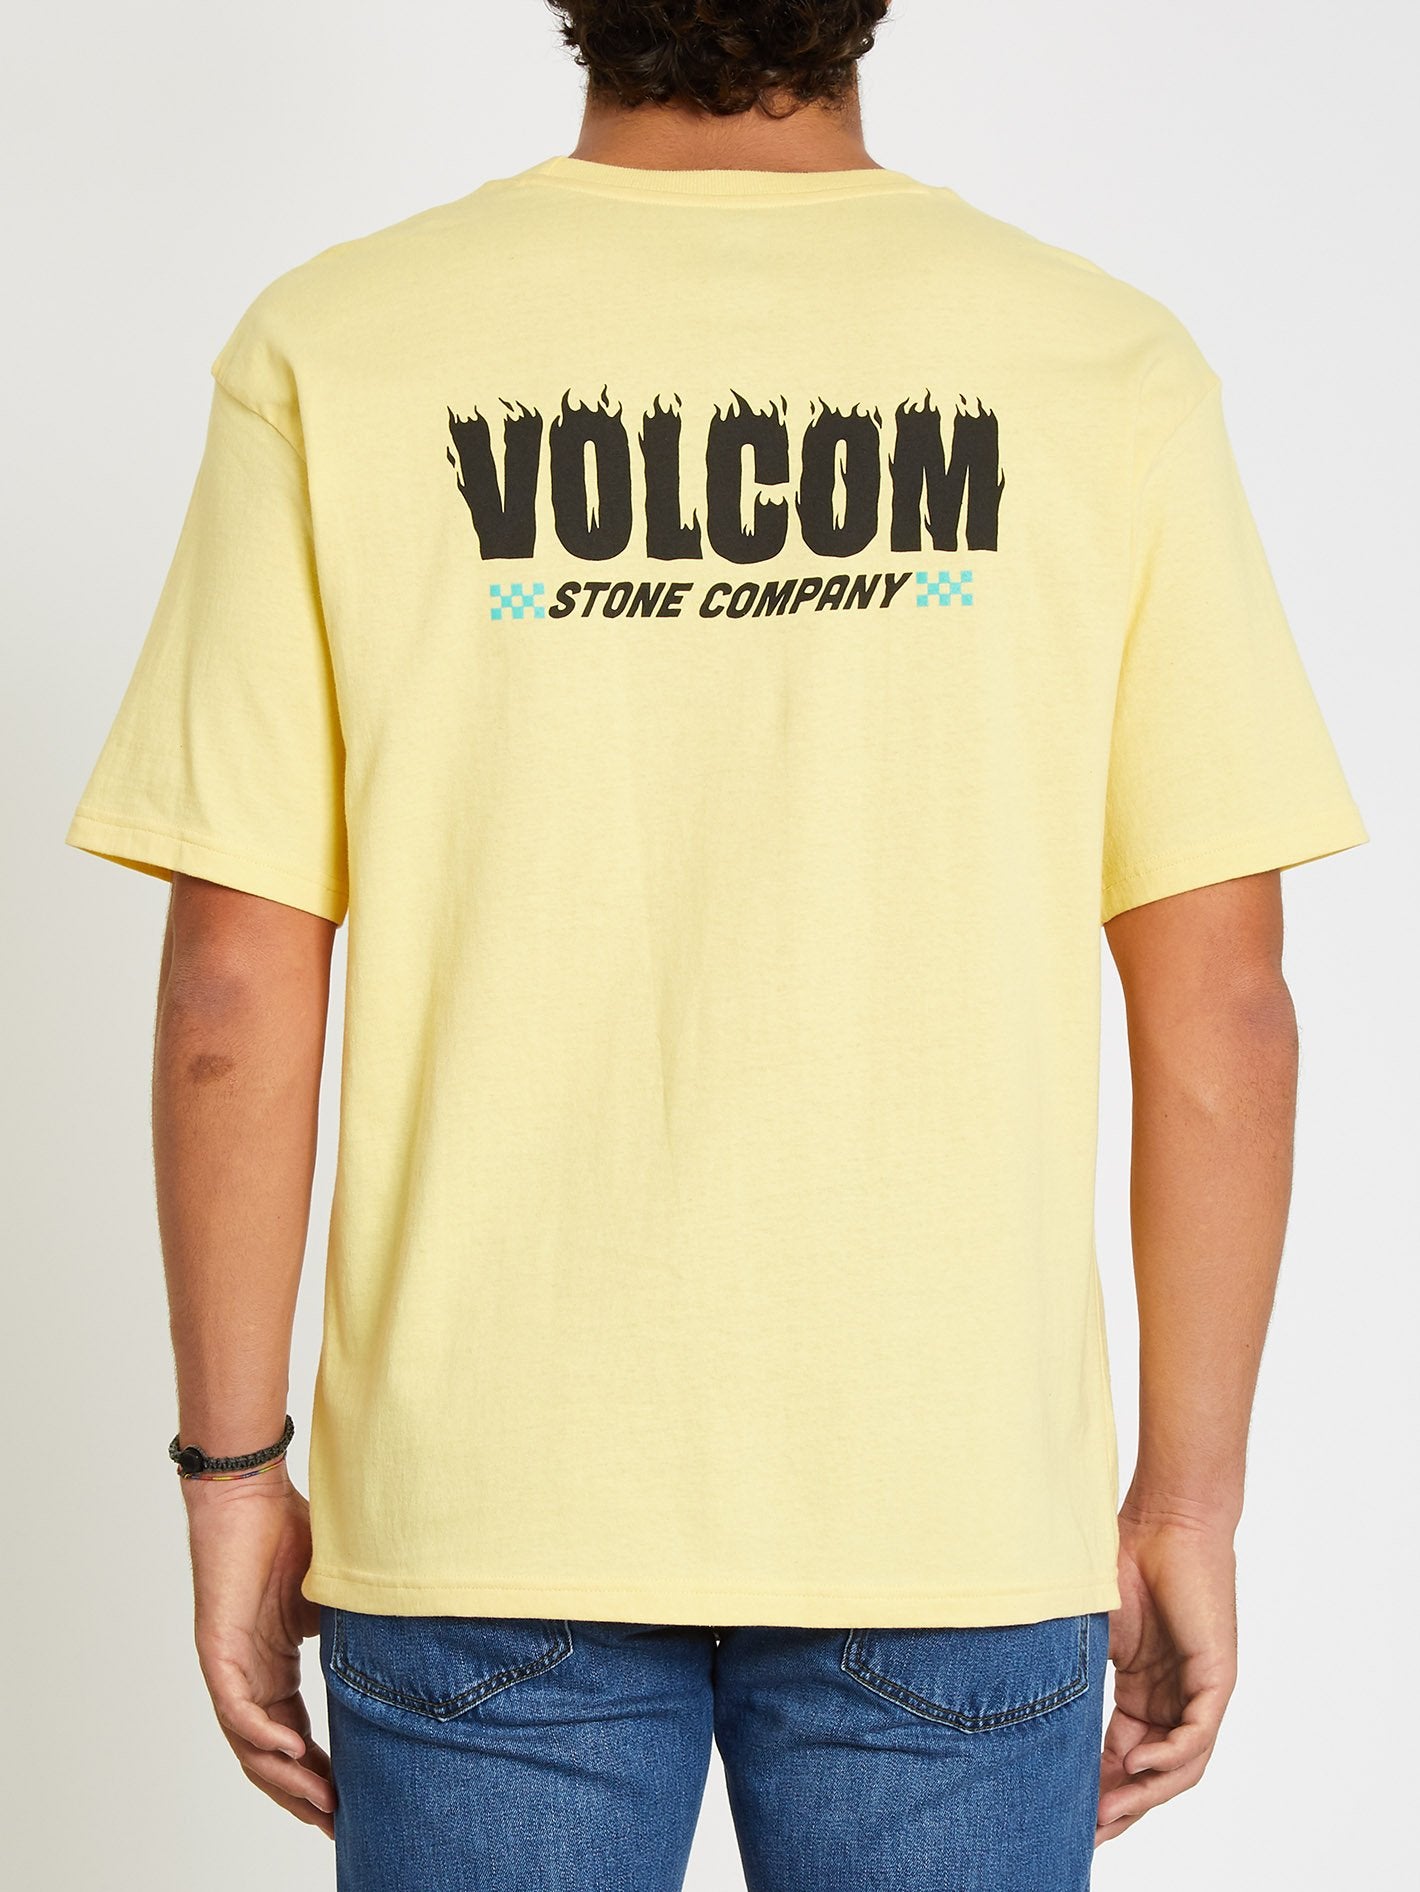 T-shirt Companystone - Dawn Yellow